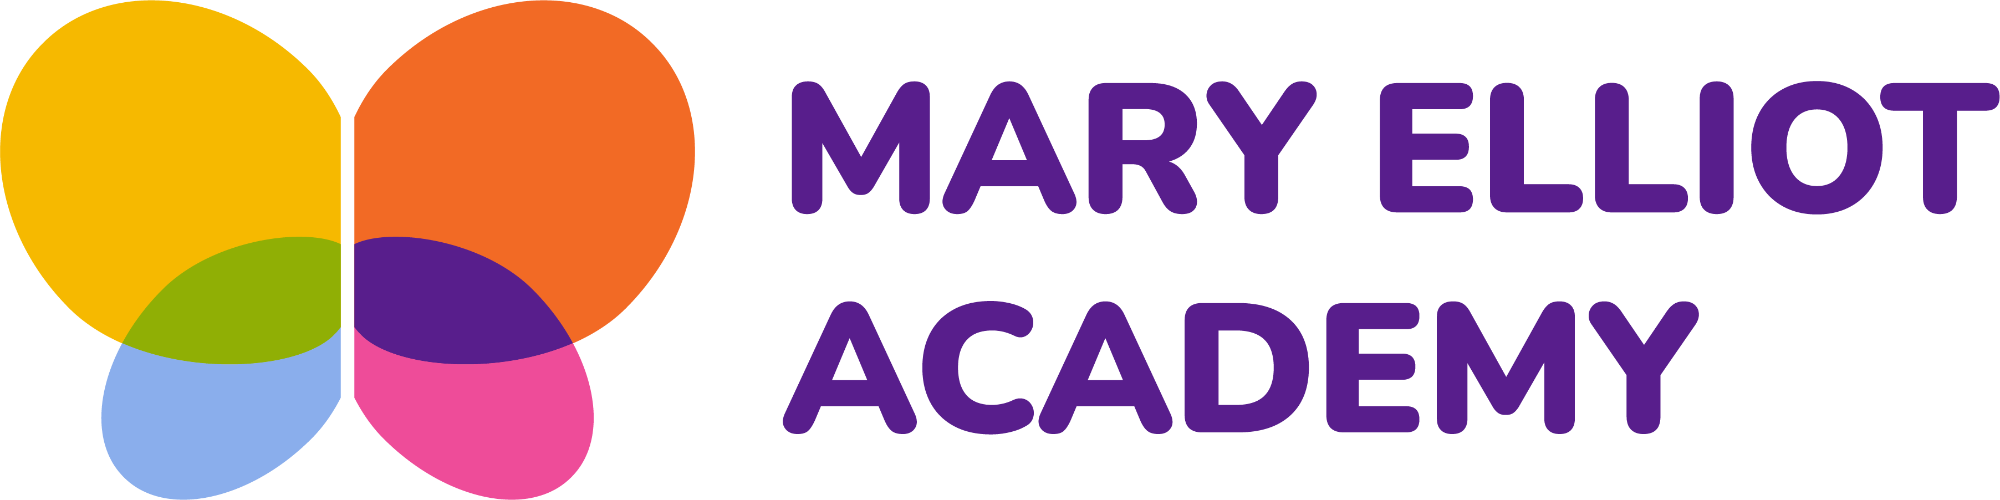 Mary Elliot Academy logo